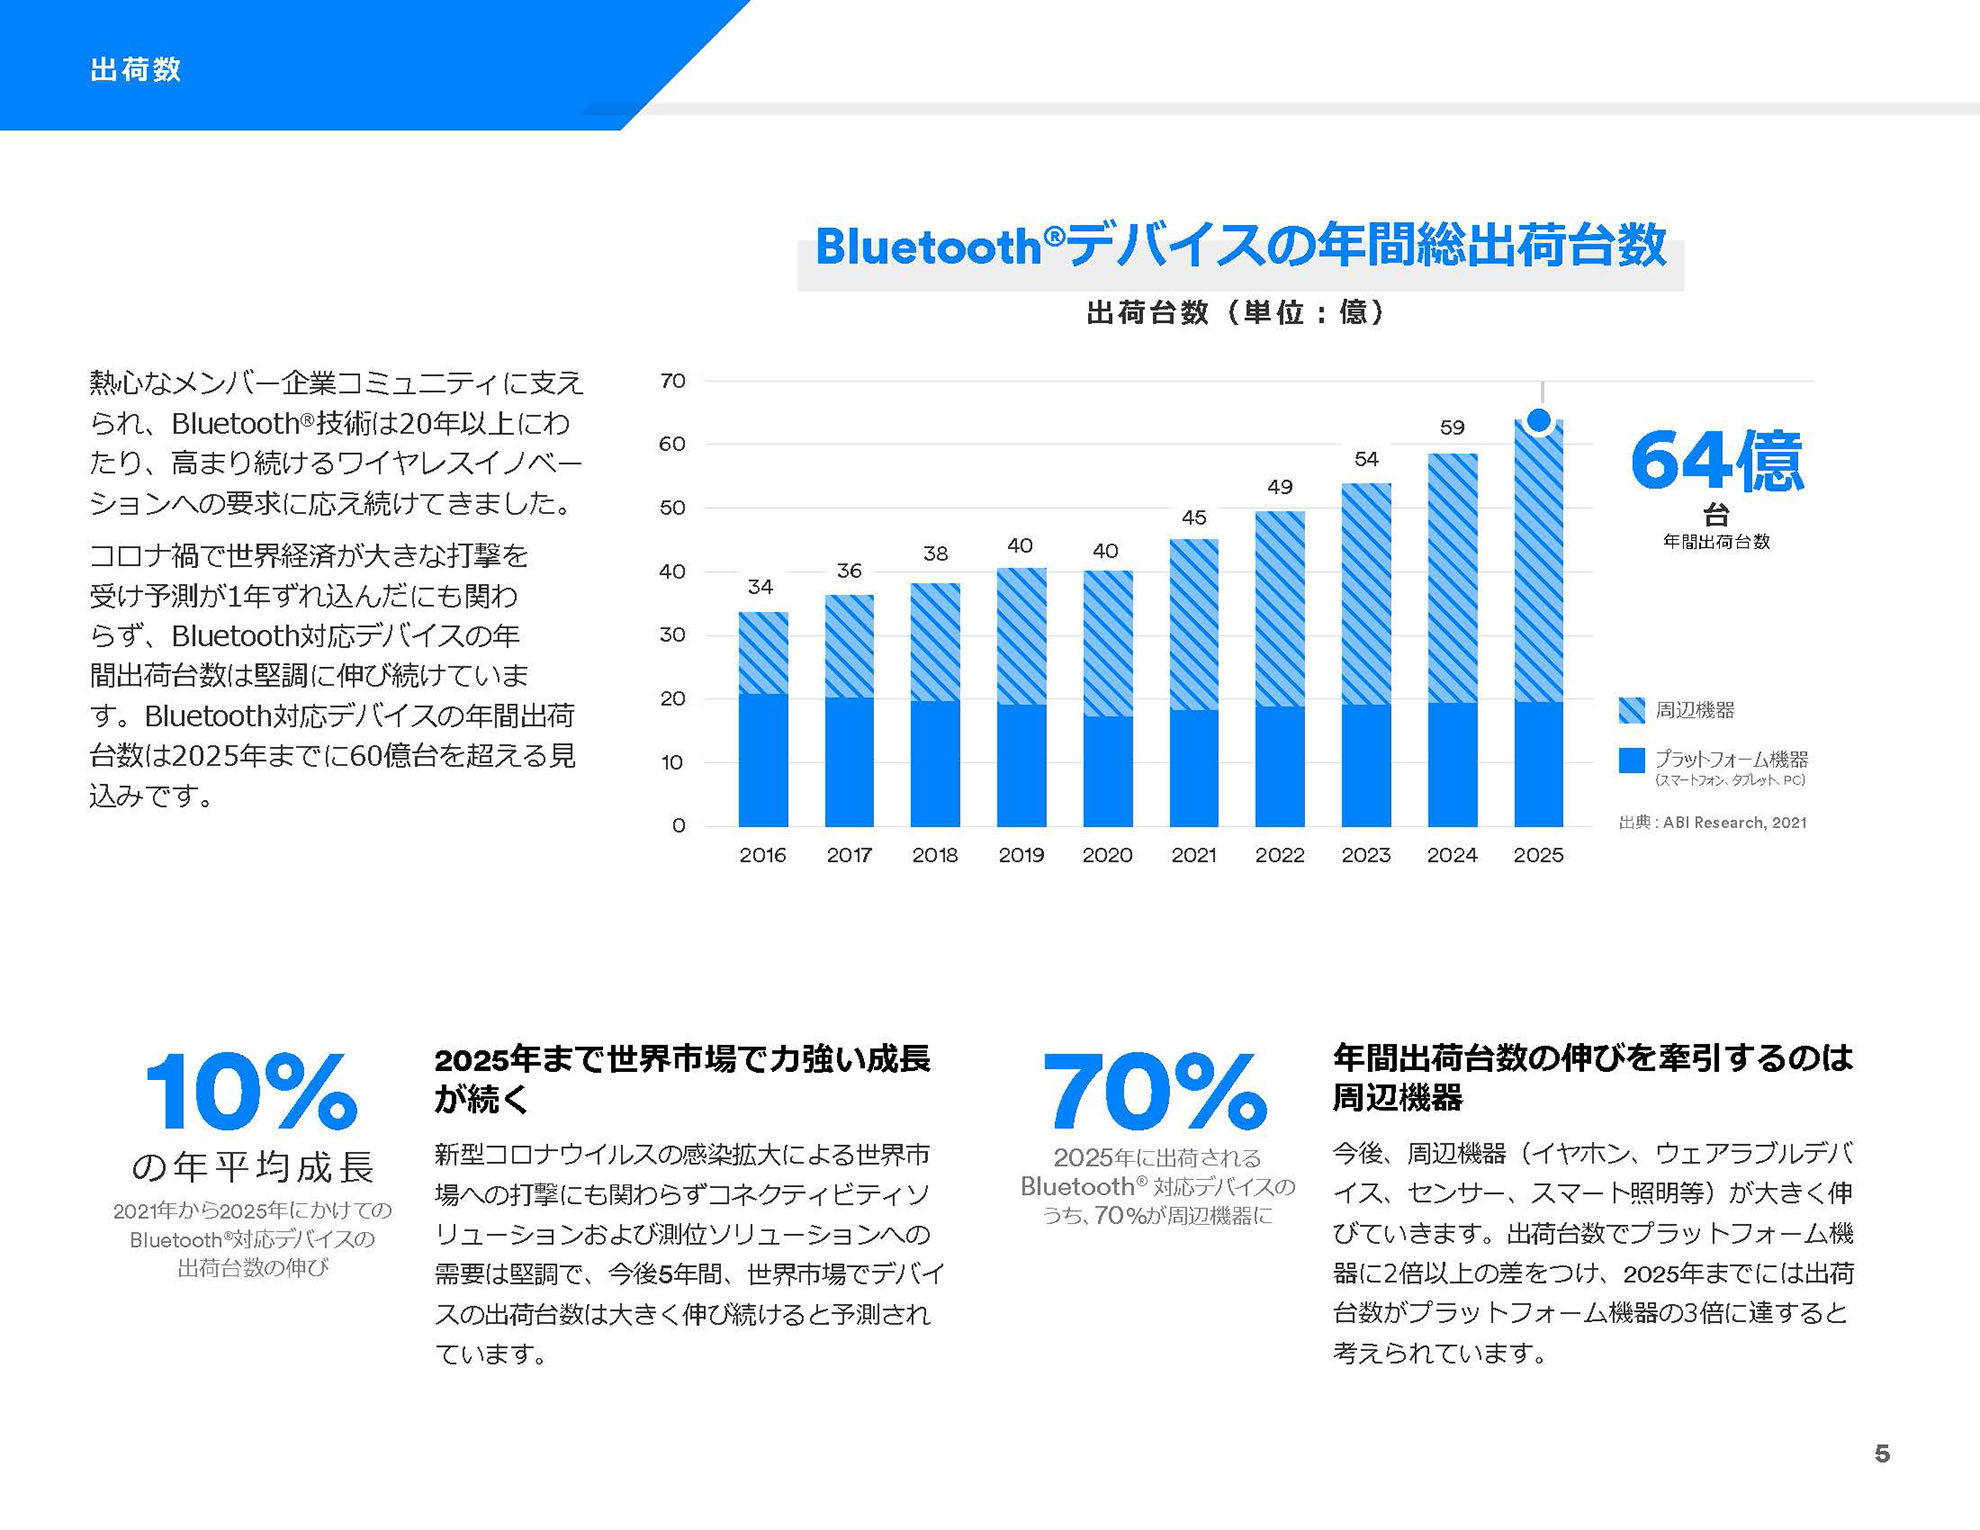 Bluetooth市場動向2021年版、昨年は「スマート照明やウェアラブル